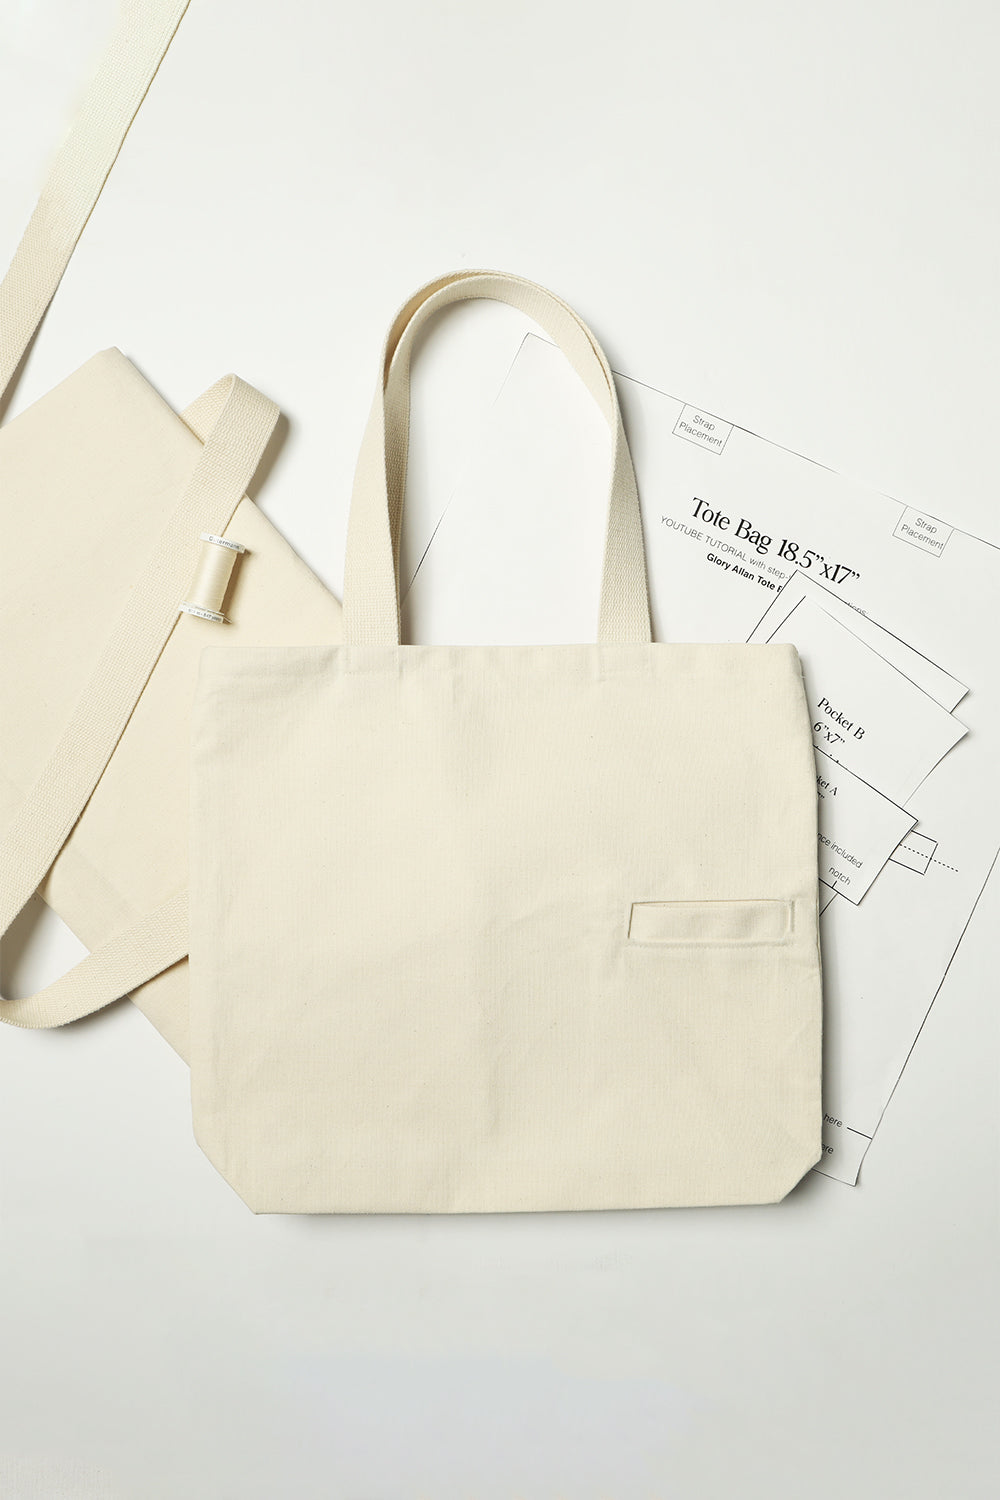 Tote Bag Diy Kit Change Branded Paper Bag To a Real Bag